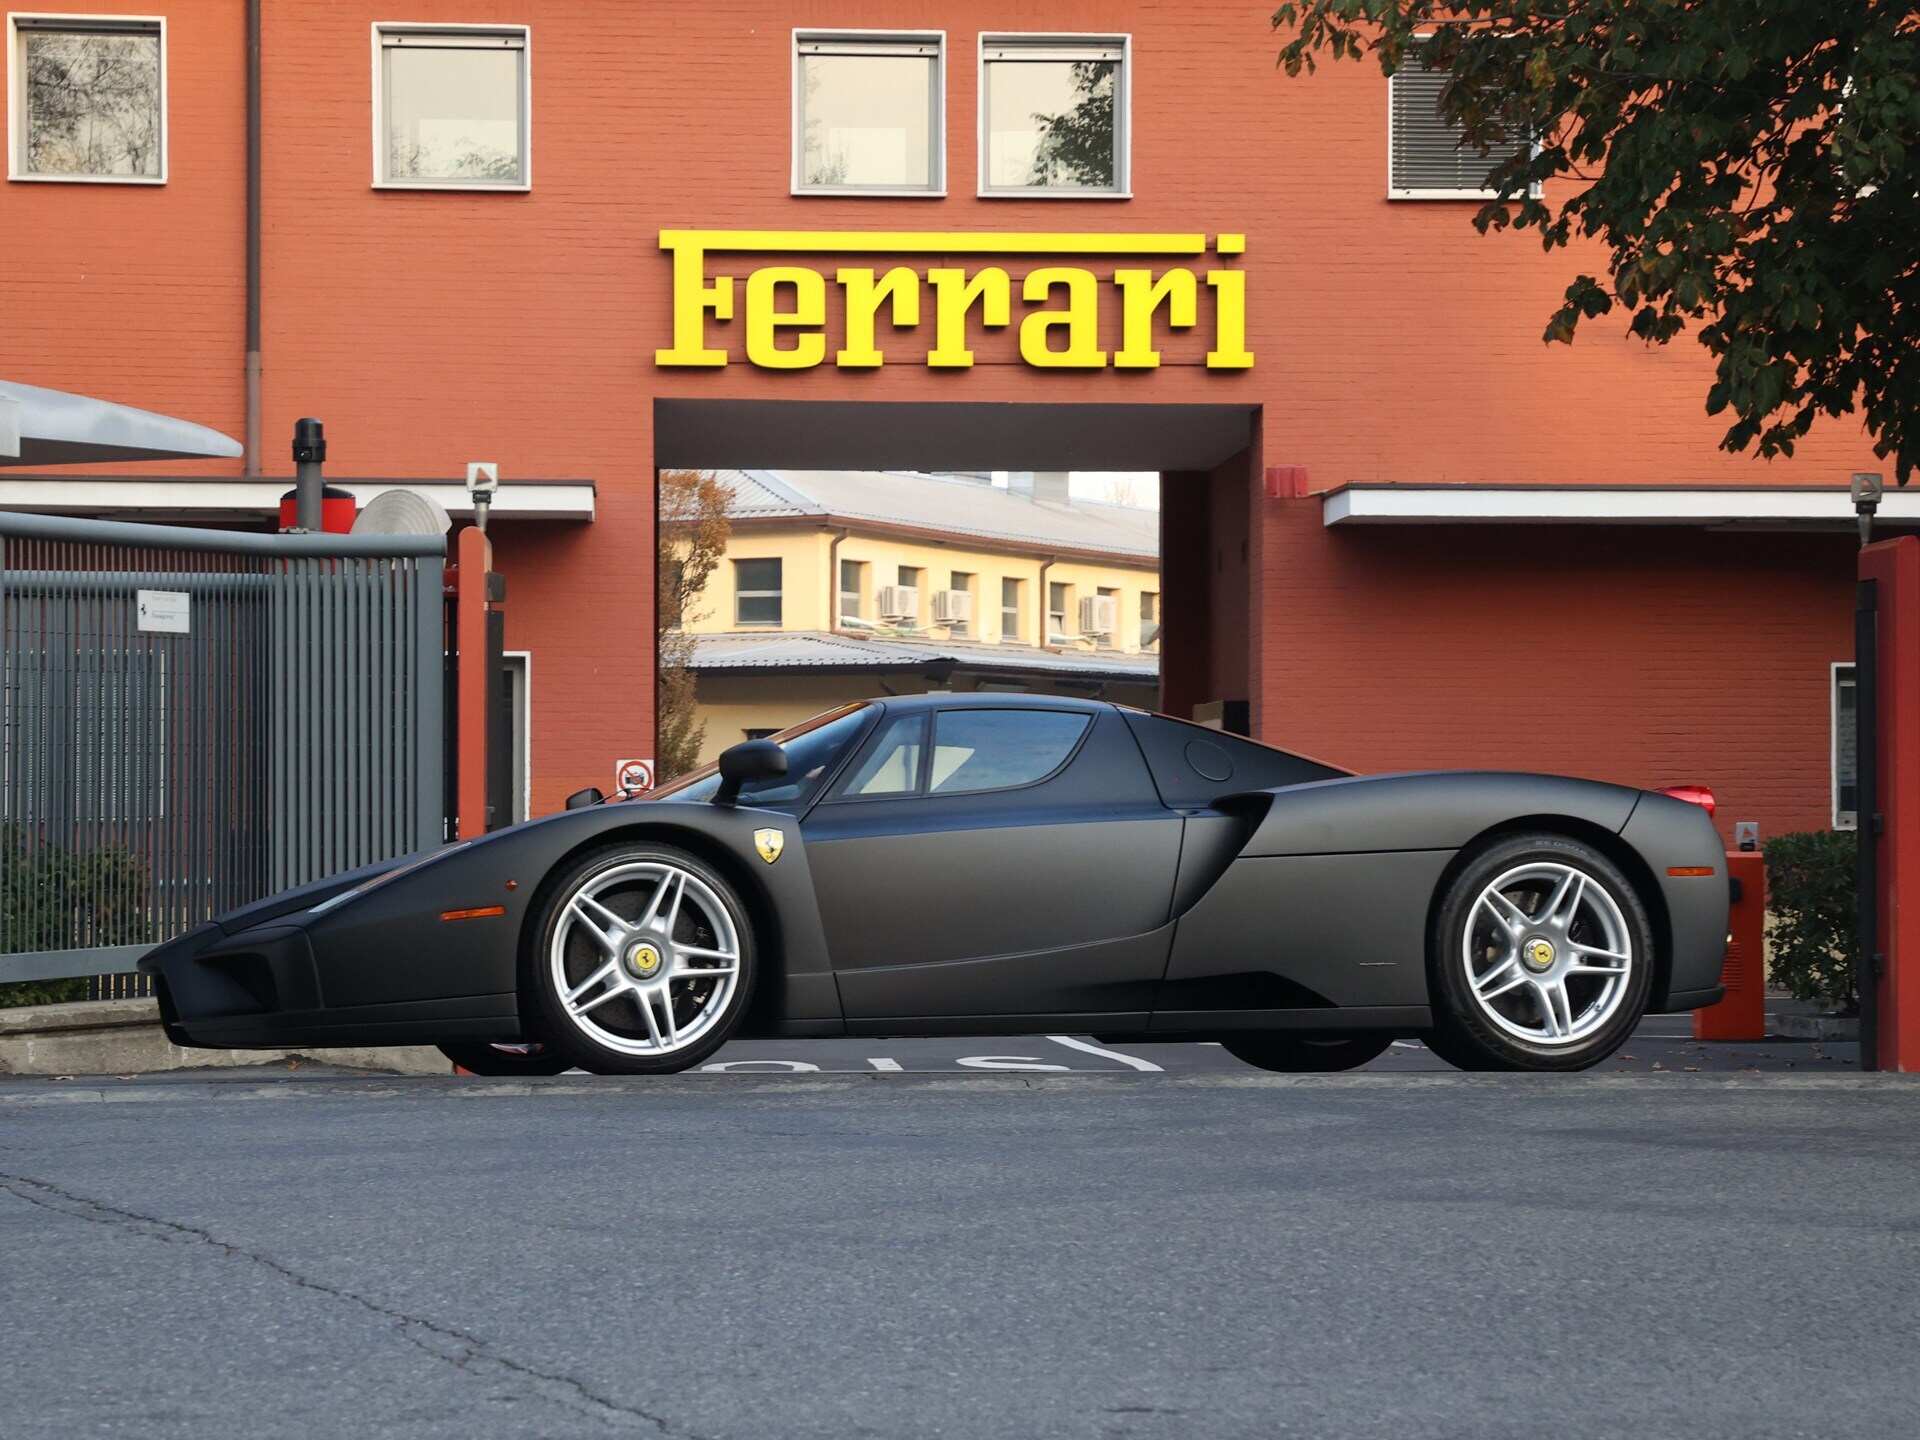 imagen 1 de Sale a subasta un Ferrari Enzo negro mate único excepcional.